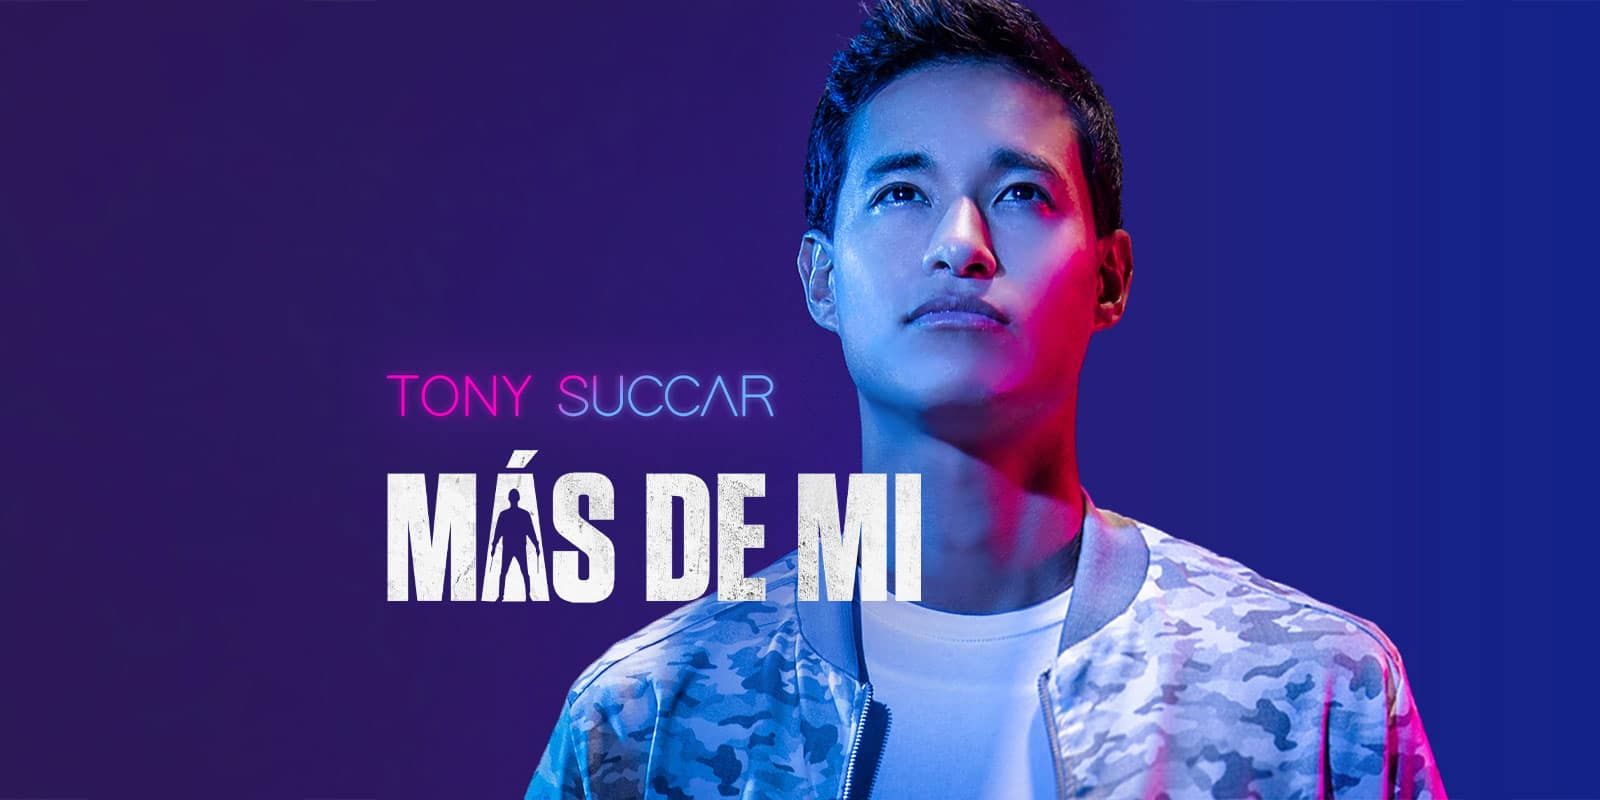 Tony Succar "Más de Mi" documents his Best Salsa Album Latin Grammy win (Tony Succar)